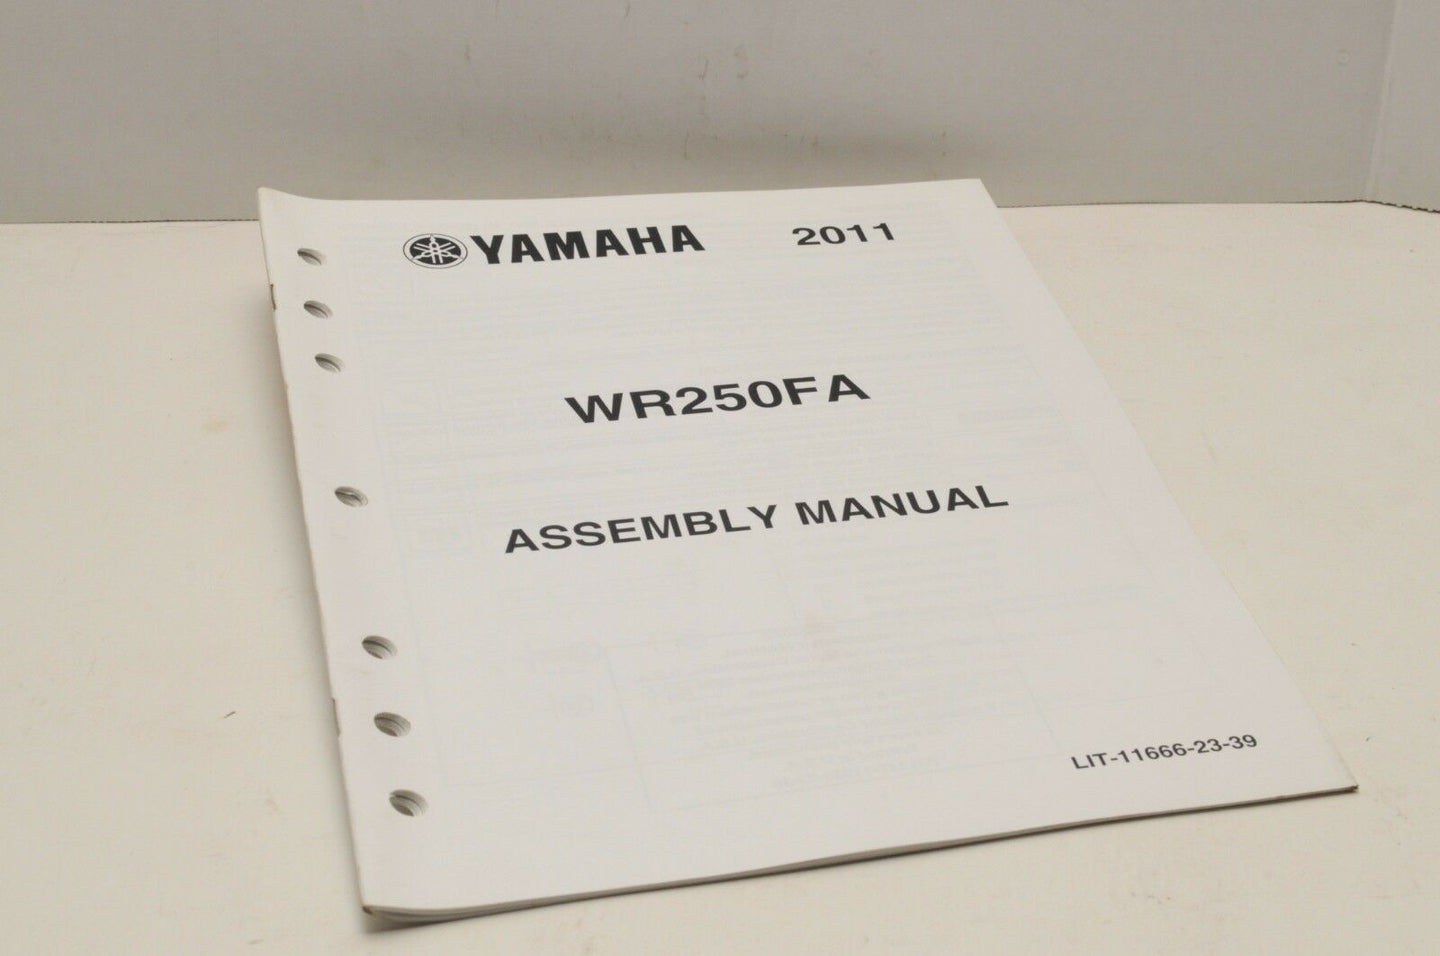 Genuine Yamaha FACTORY ASSEMBLY SETUP MANUAL WR250F WR250FA 2011 LIT-11666-23-39